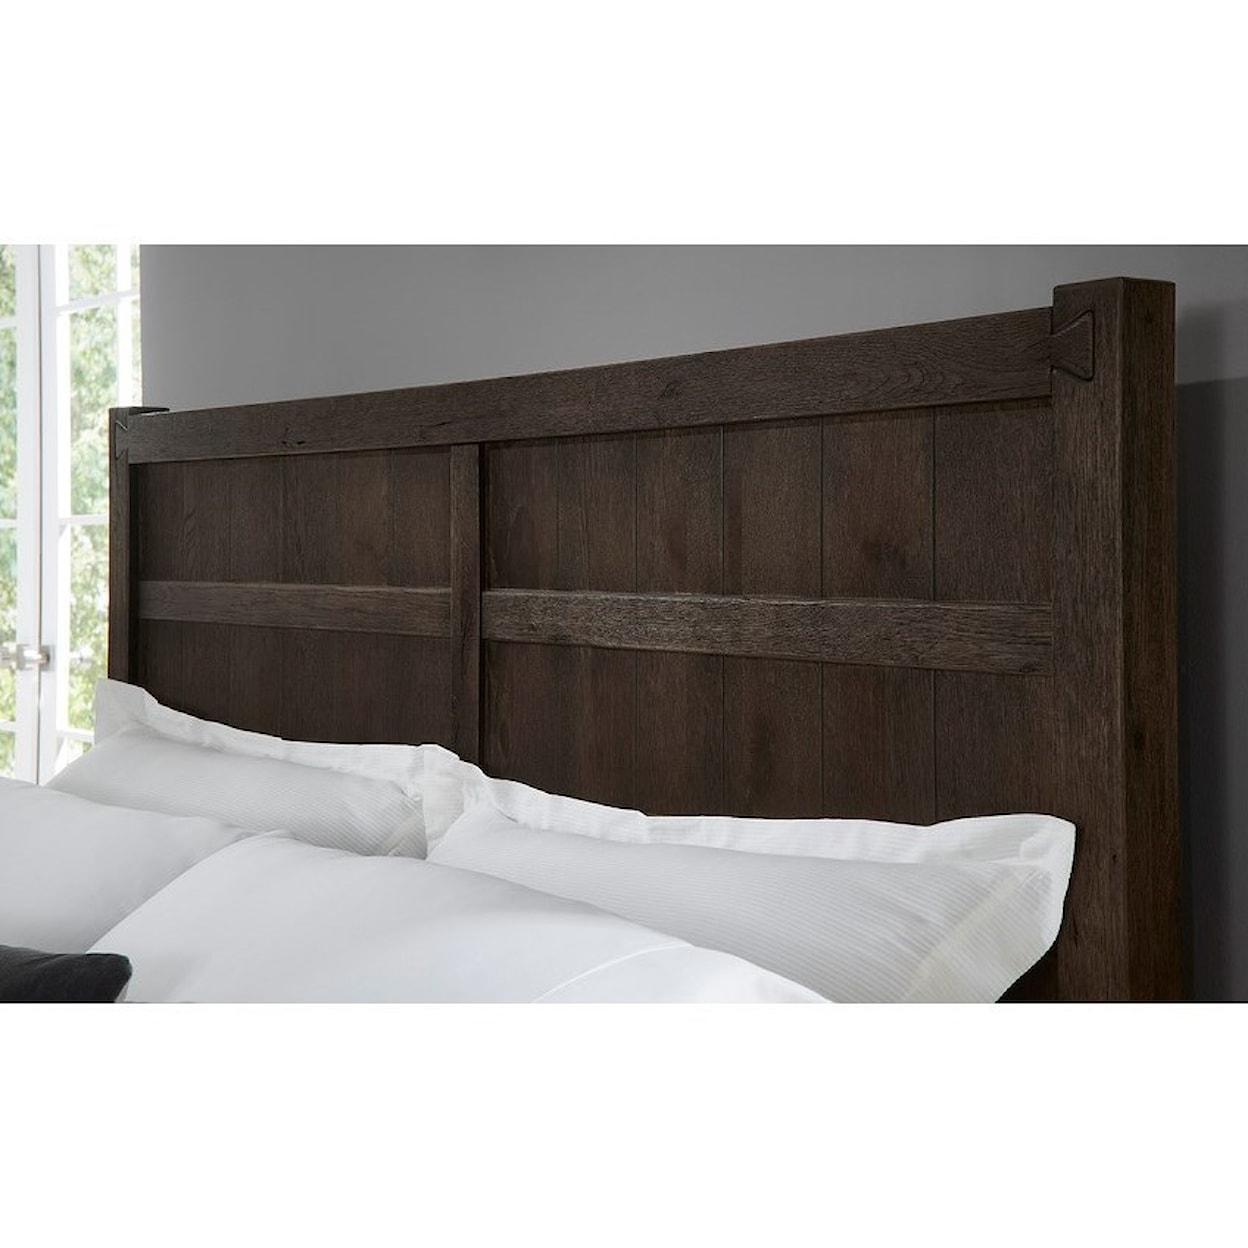 Carolina Bedroom Dovetail Bedroom King Board and Batten Bed